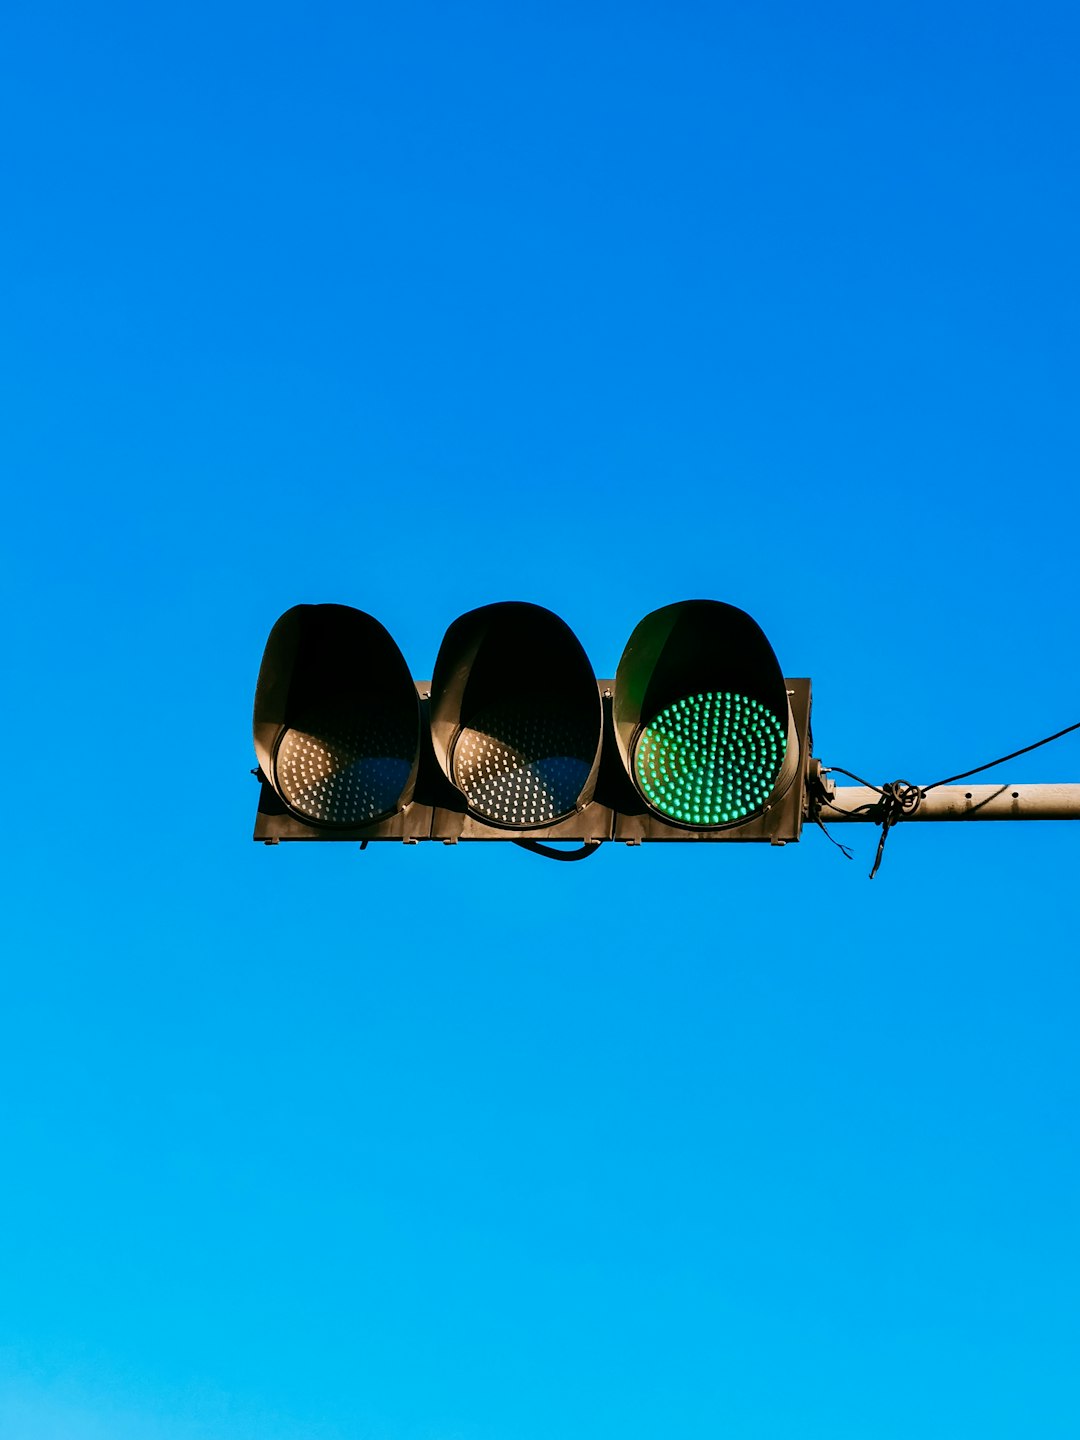 black traffic light under blue sky during daytime